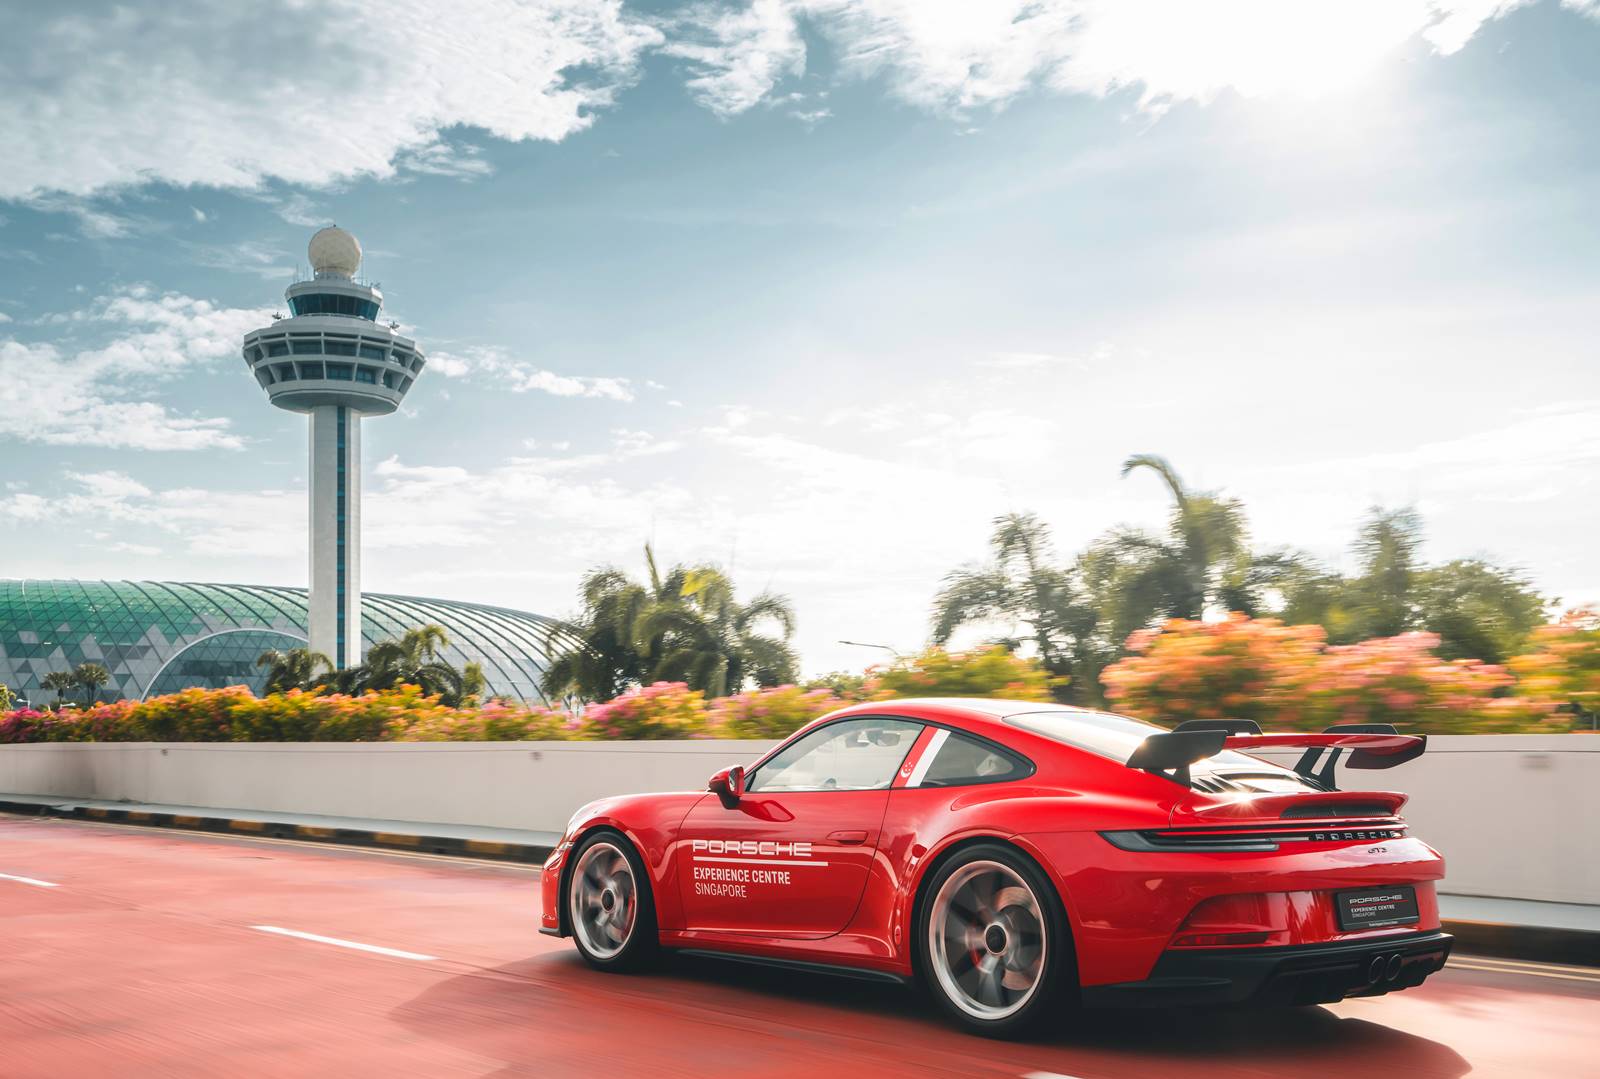 Porsche Experience Centre Singapore